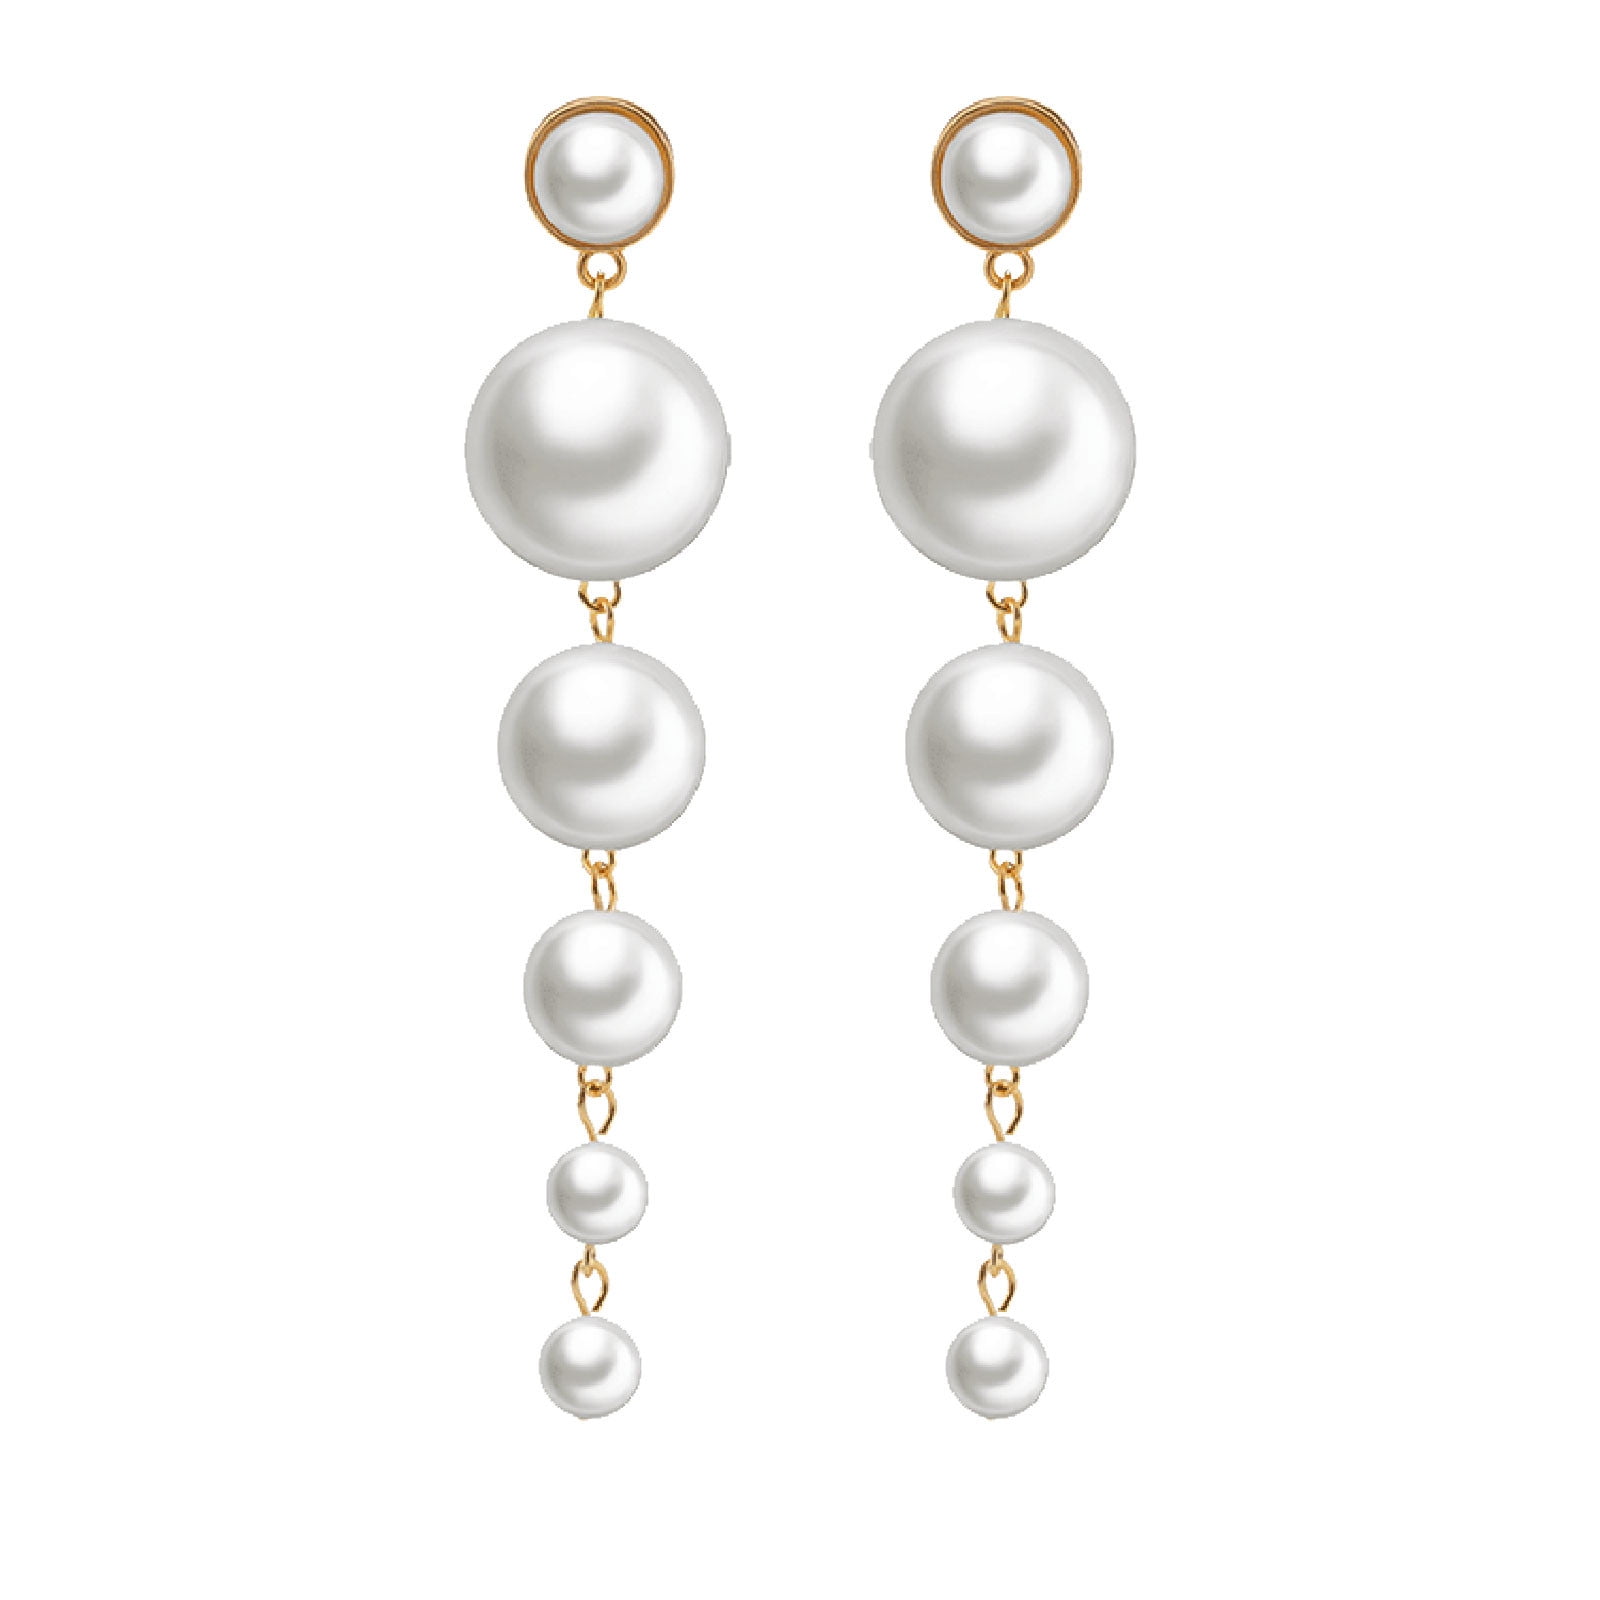 Horplkj Clearance Elegant Jewelry Women's Pearl Fashionable String Long ...